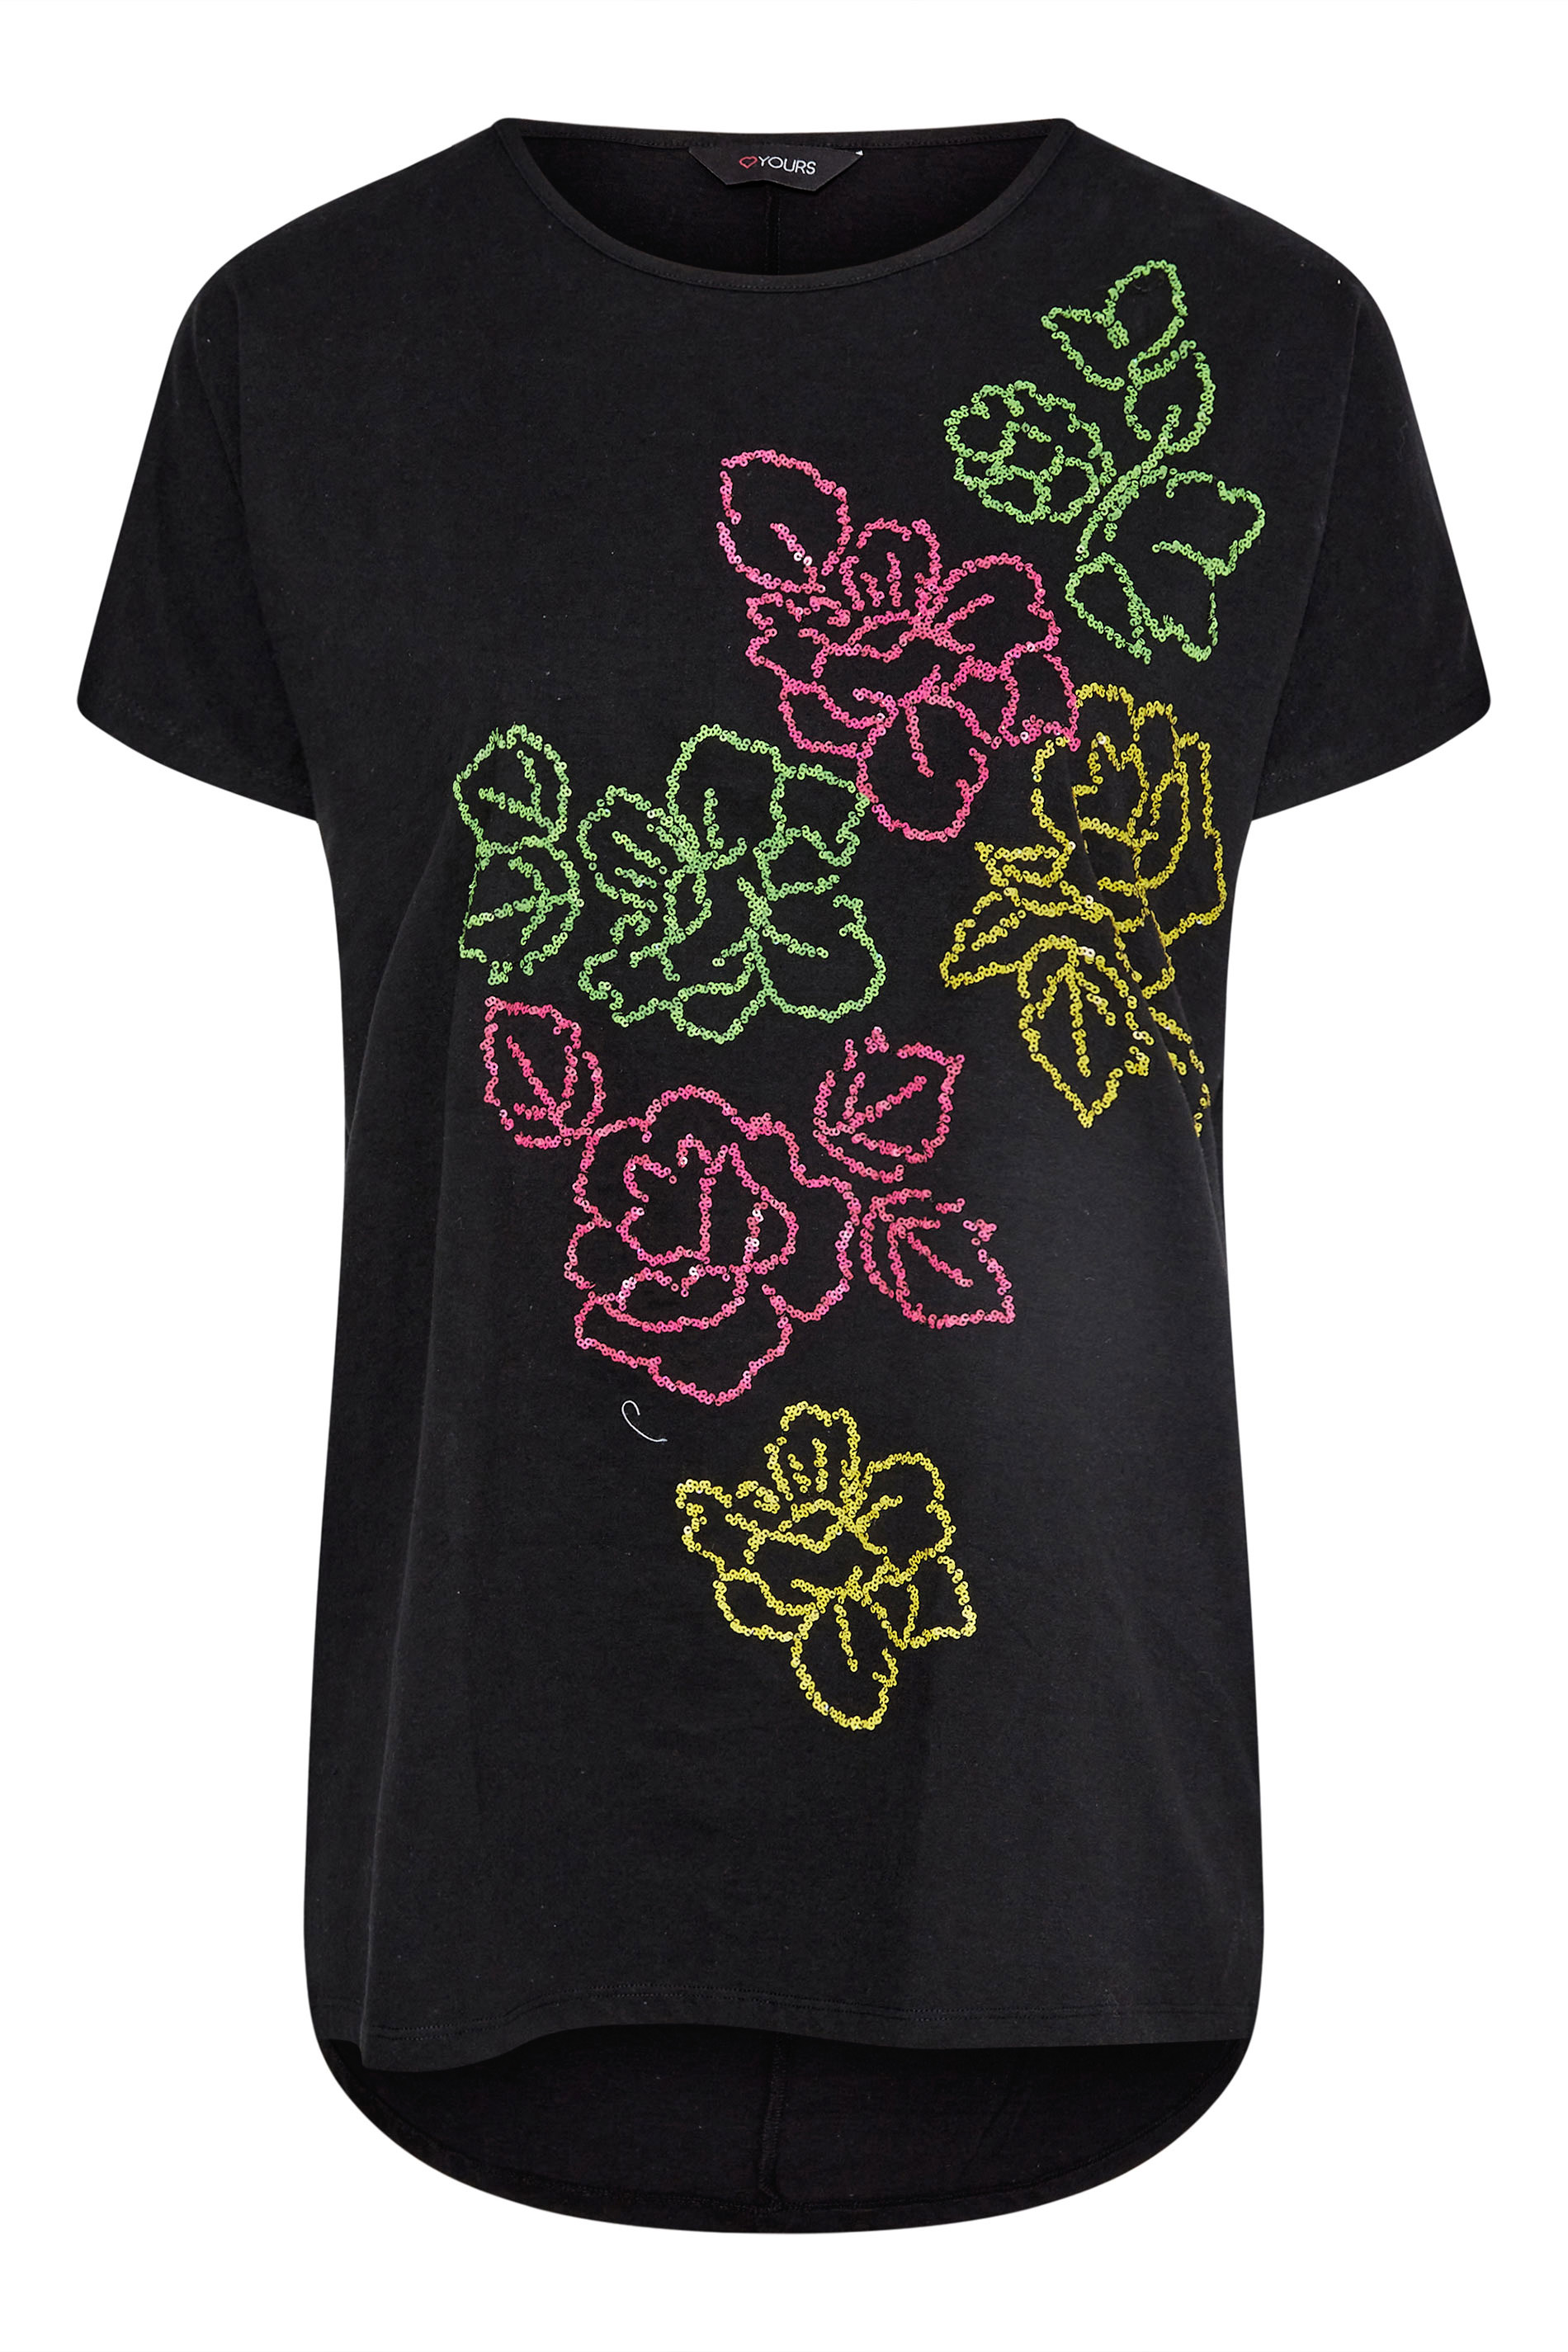 Grande taille  Tops Grande taille  T-Shirts | T-Shirt Noir Design Floral en Sequins - CW90598